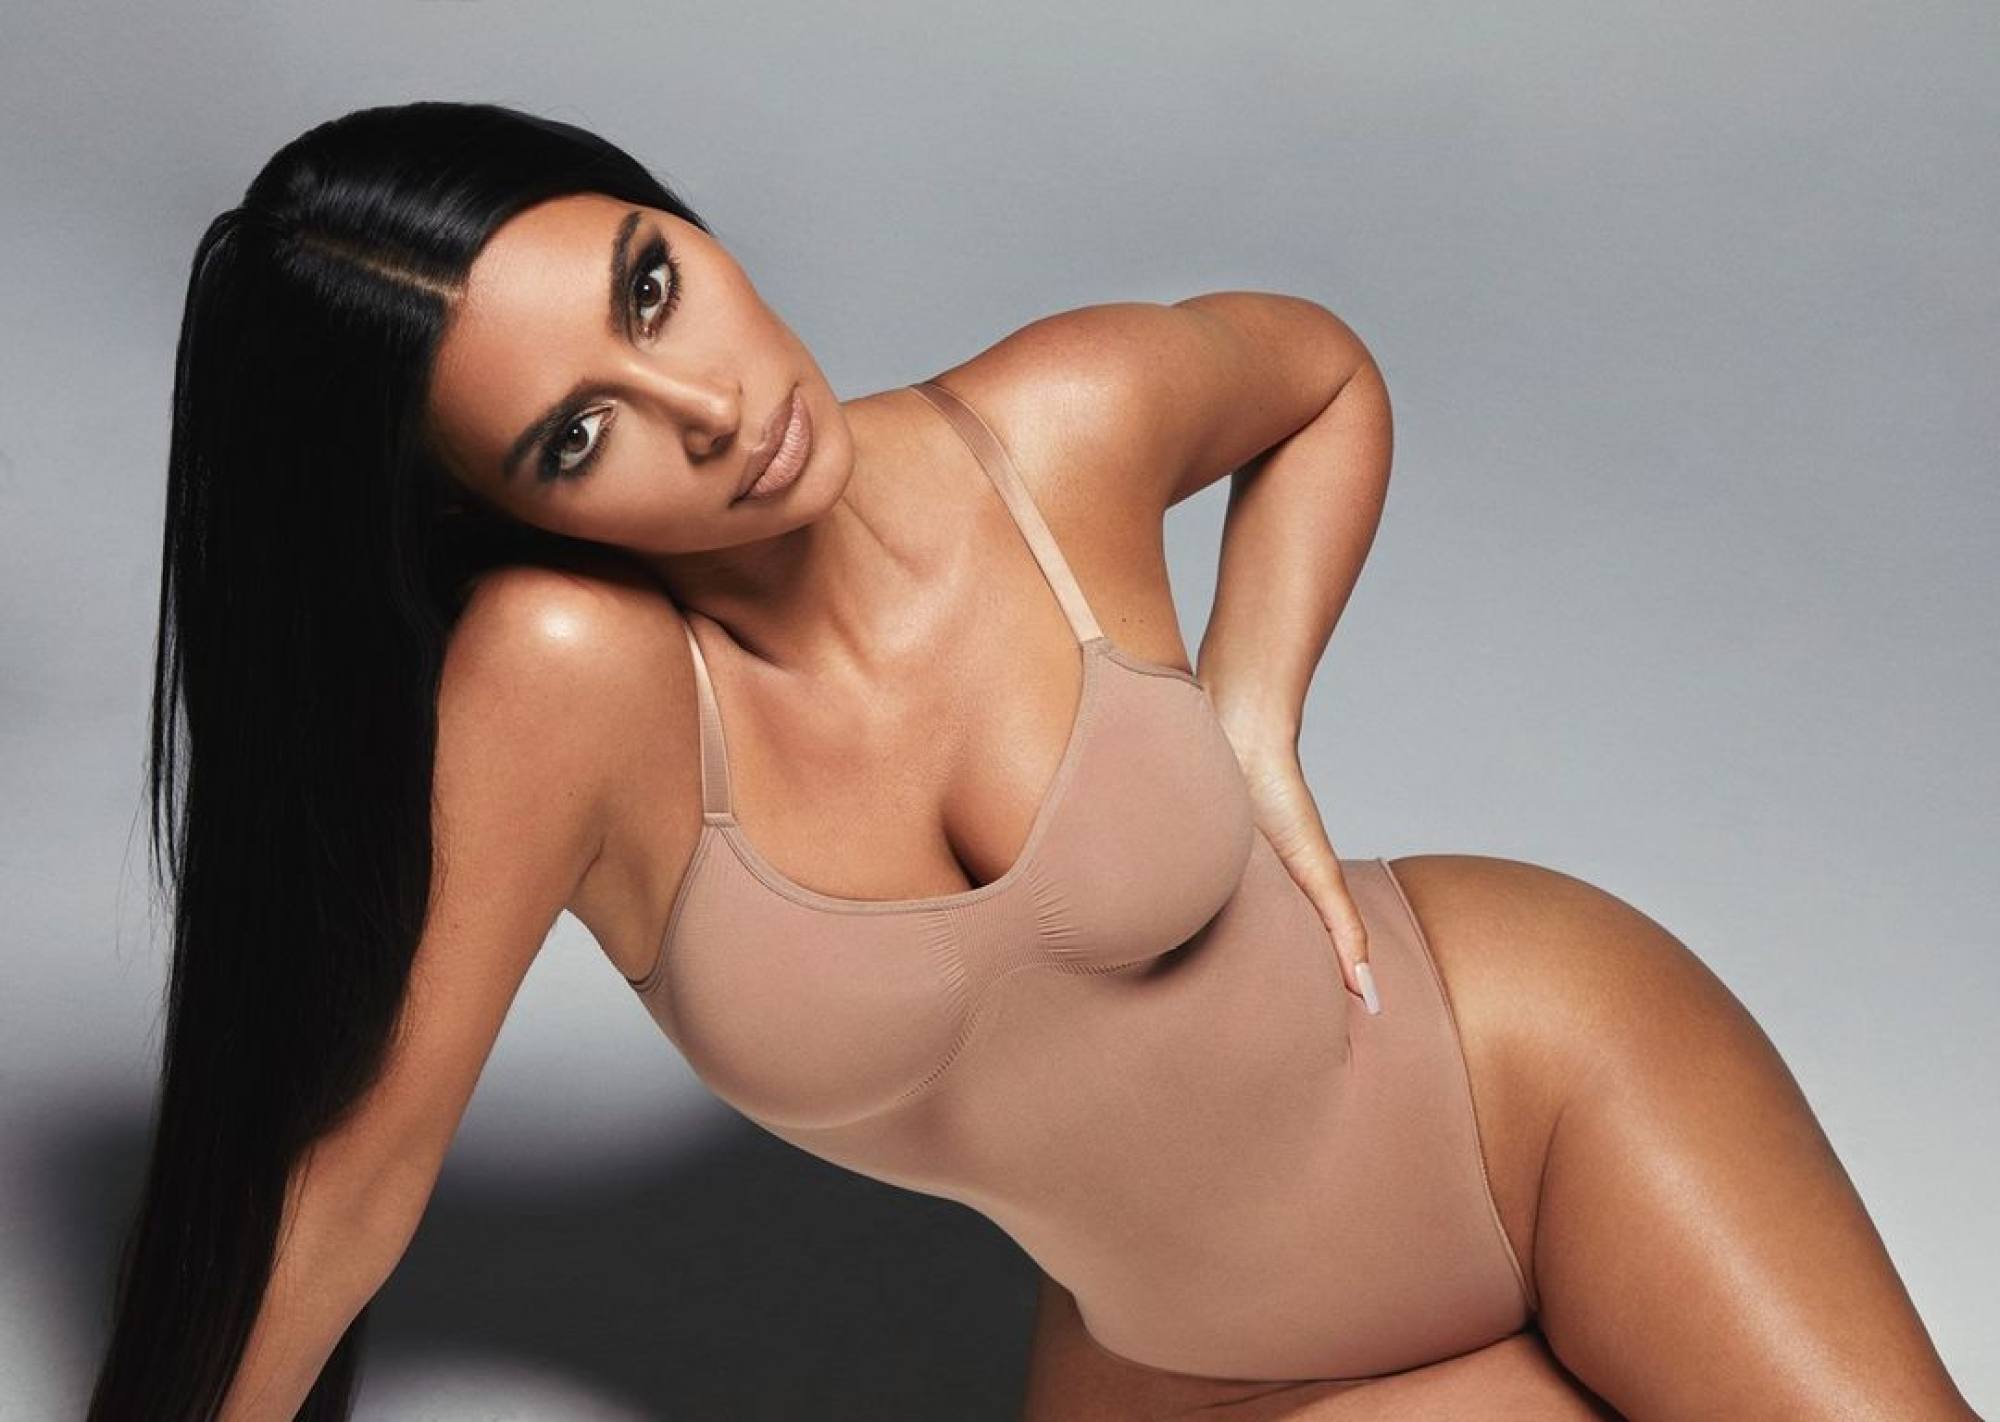 5 celebs with billion-dollar empires: Kim Kardashian and Kanye